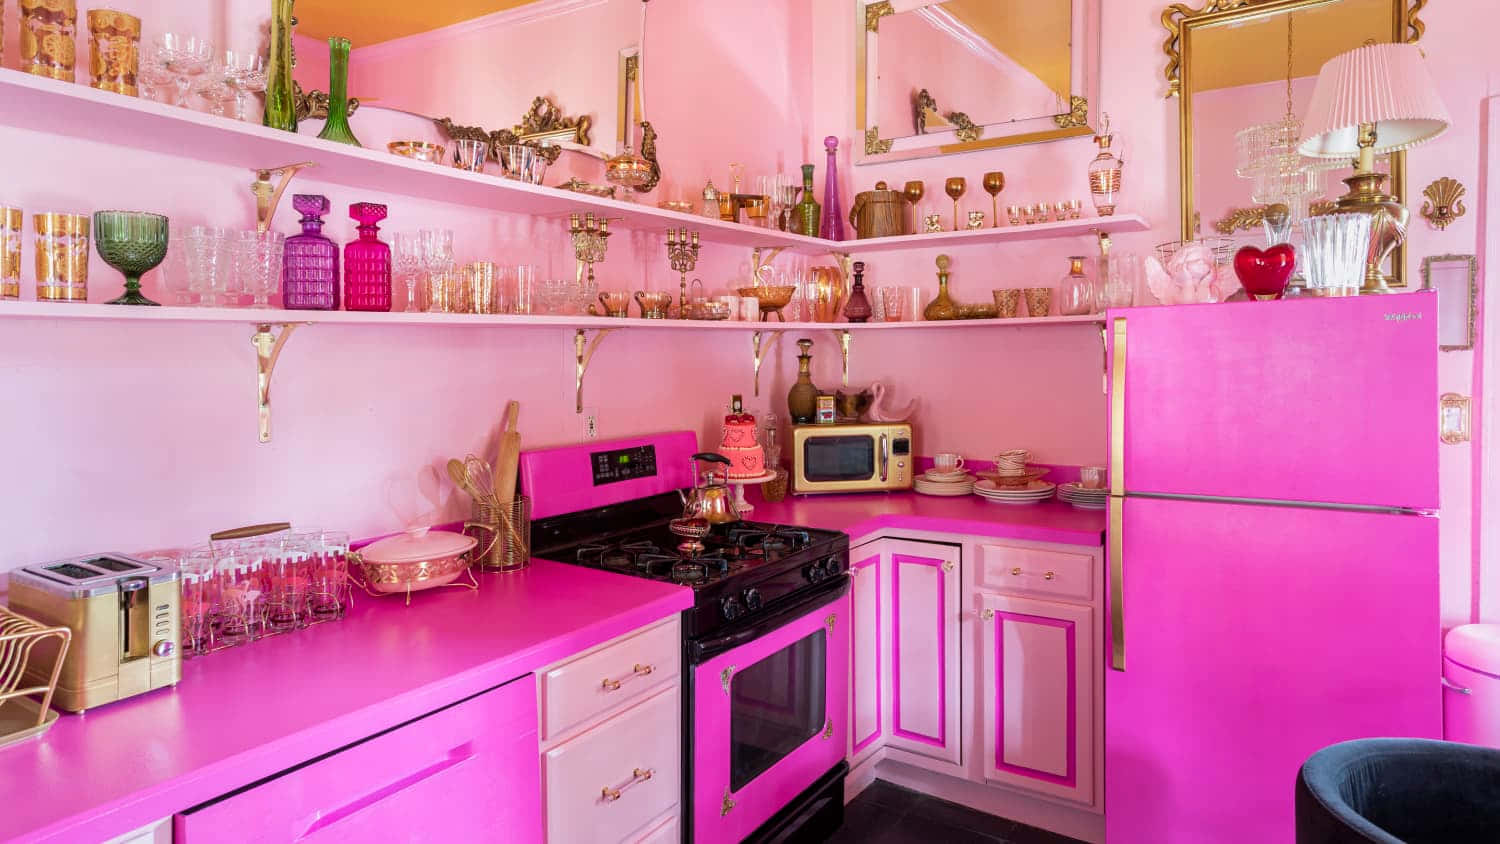 Immaginedi Una Cucina Estetica Rosa.